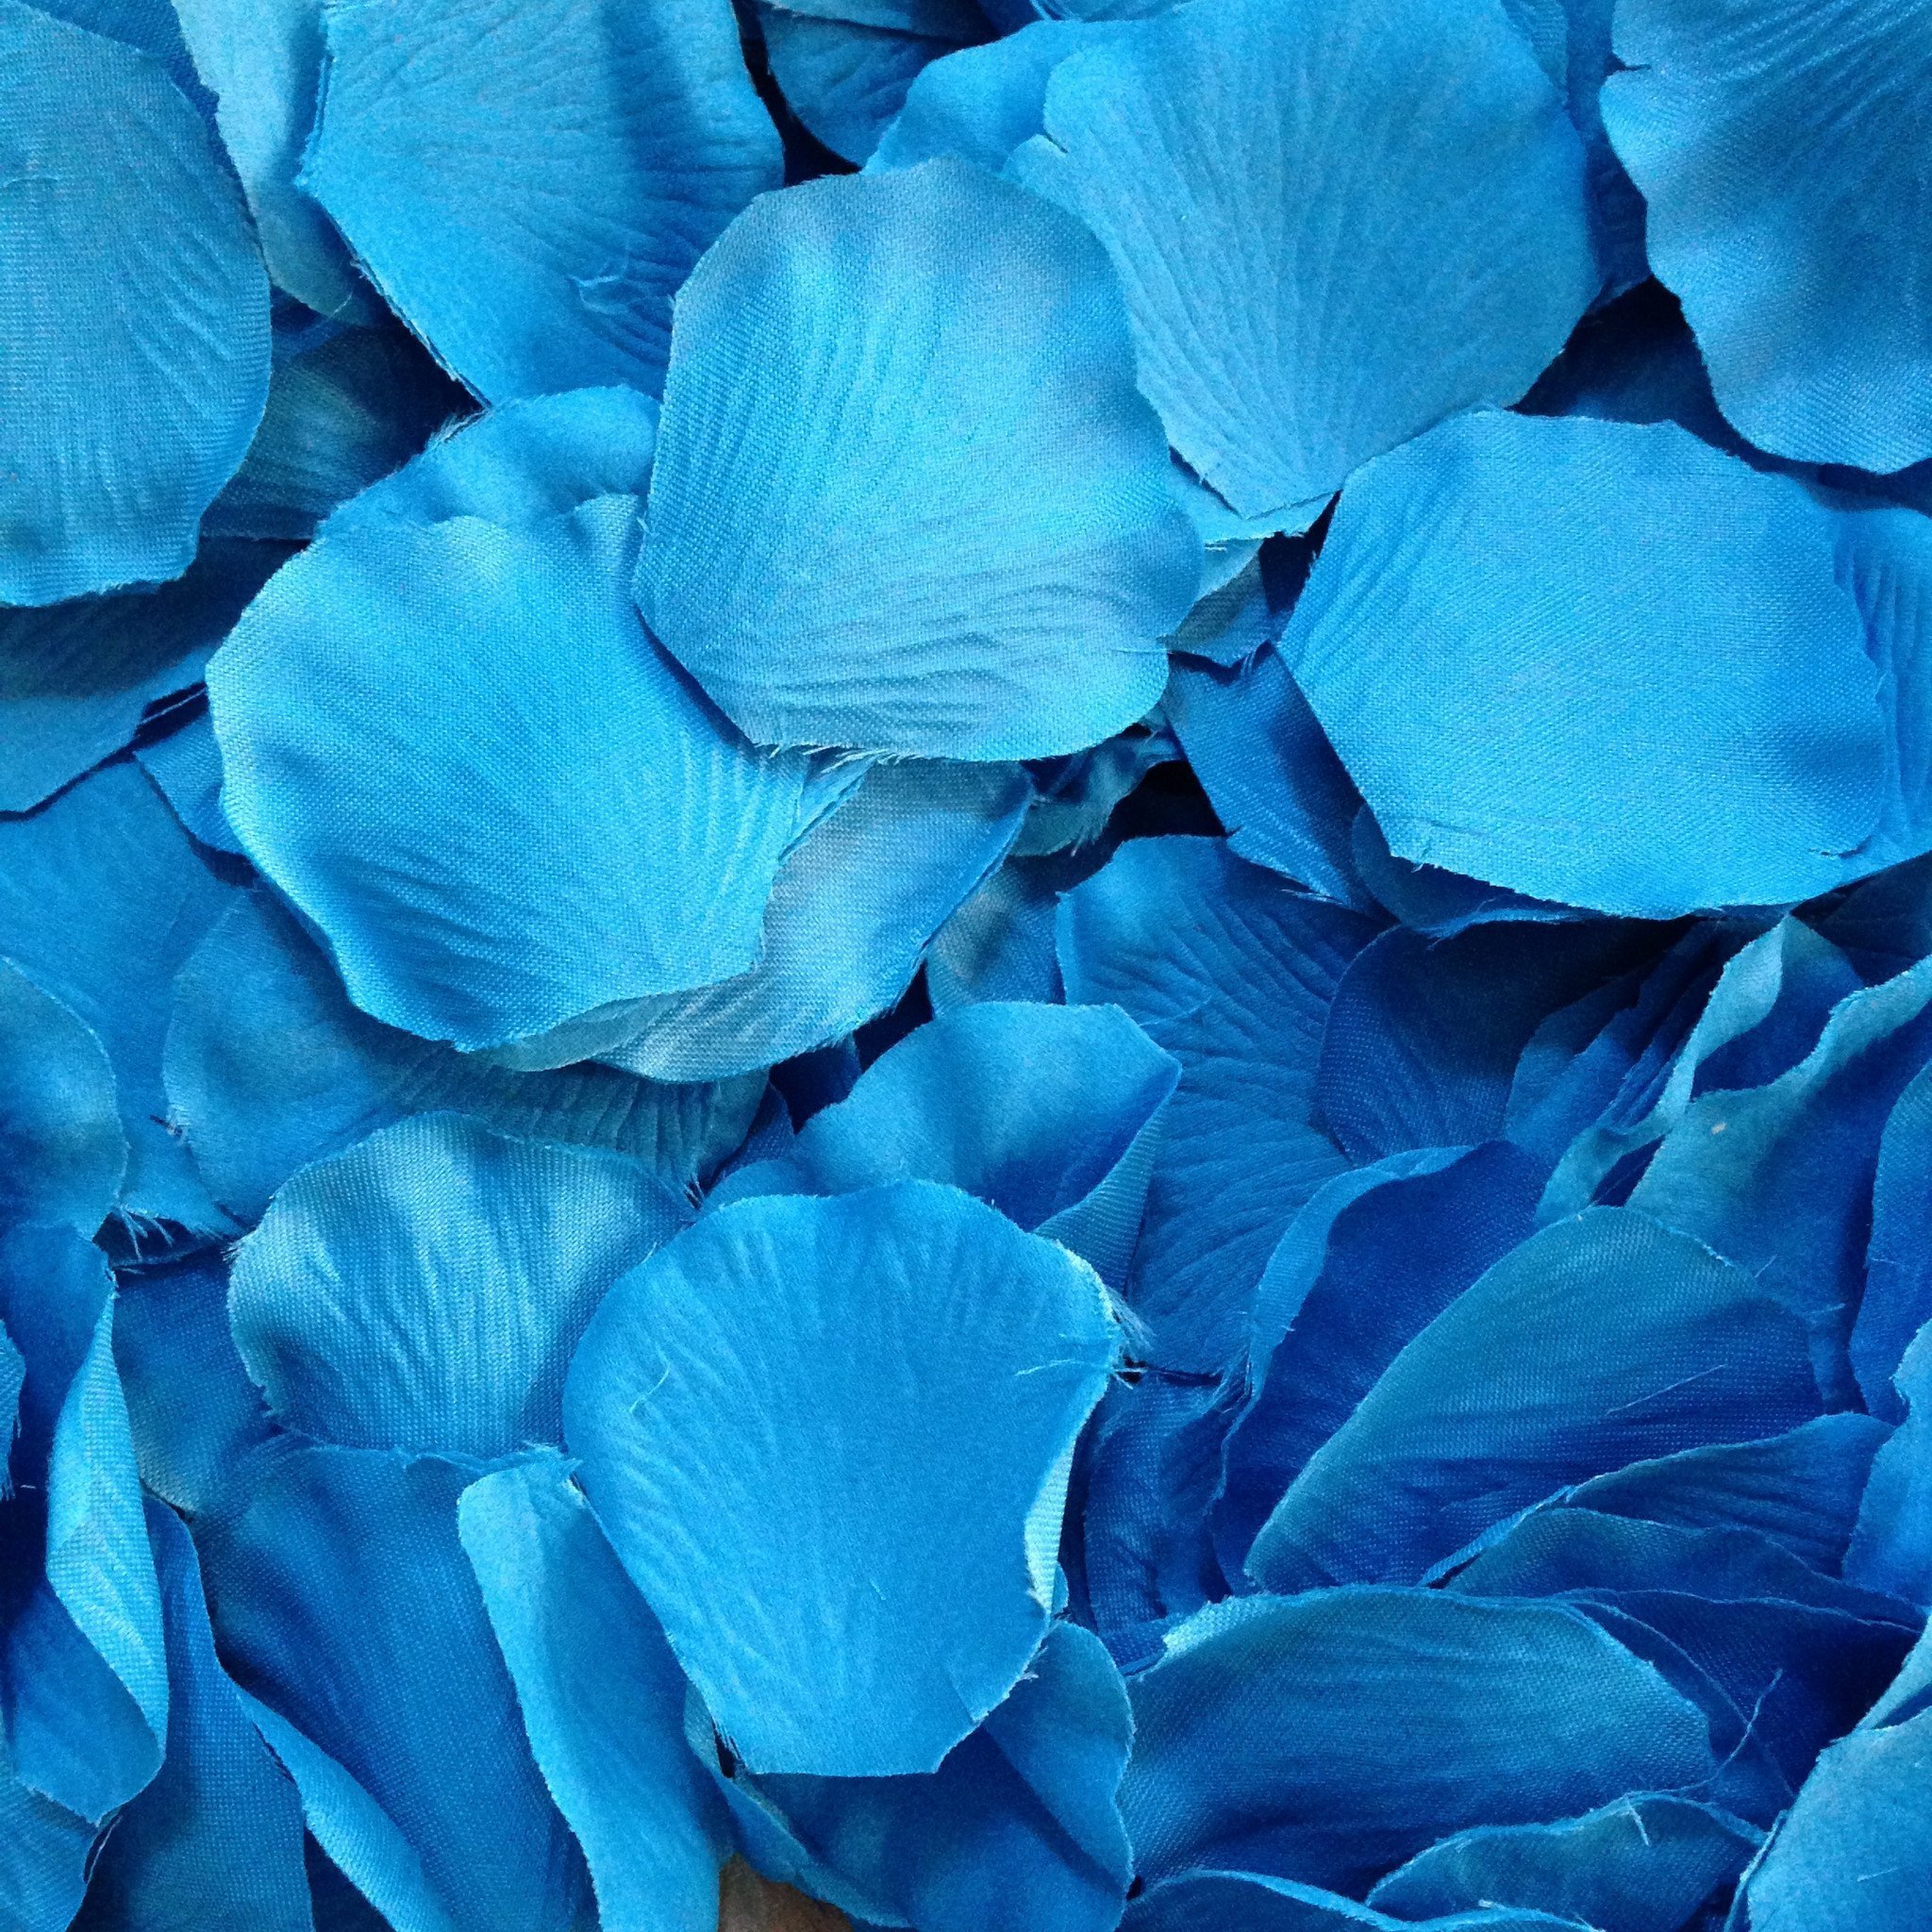 Лазоревый голубой. Rose 3937 голубая бирюза. Голубые обои. Бирюзовый цвет. Бирюзовый фон.